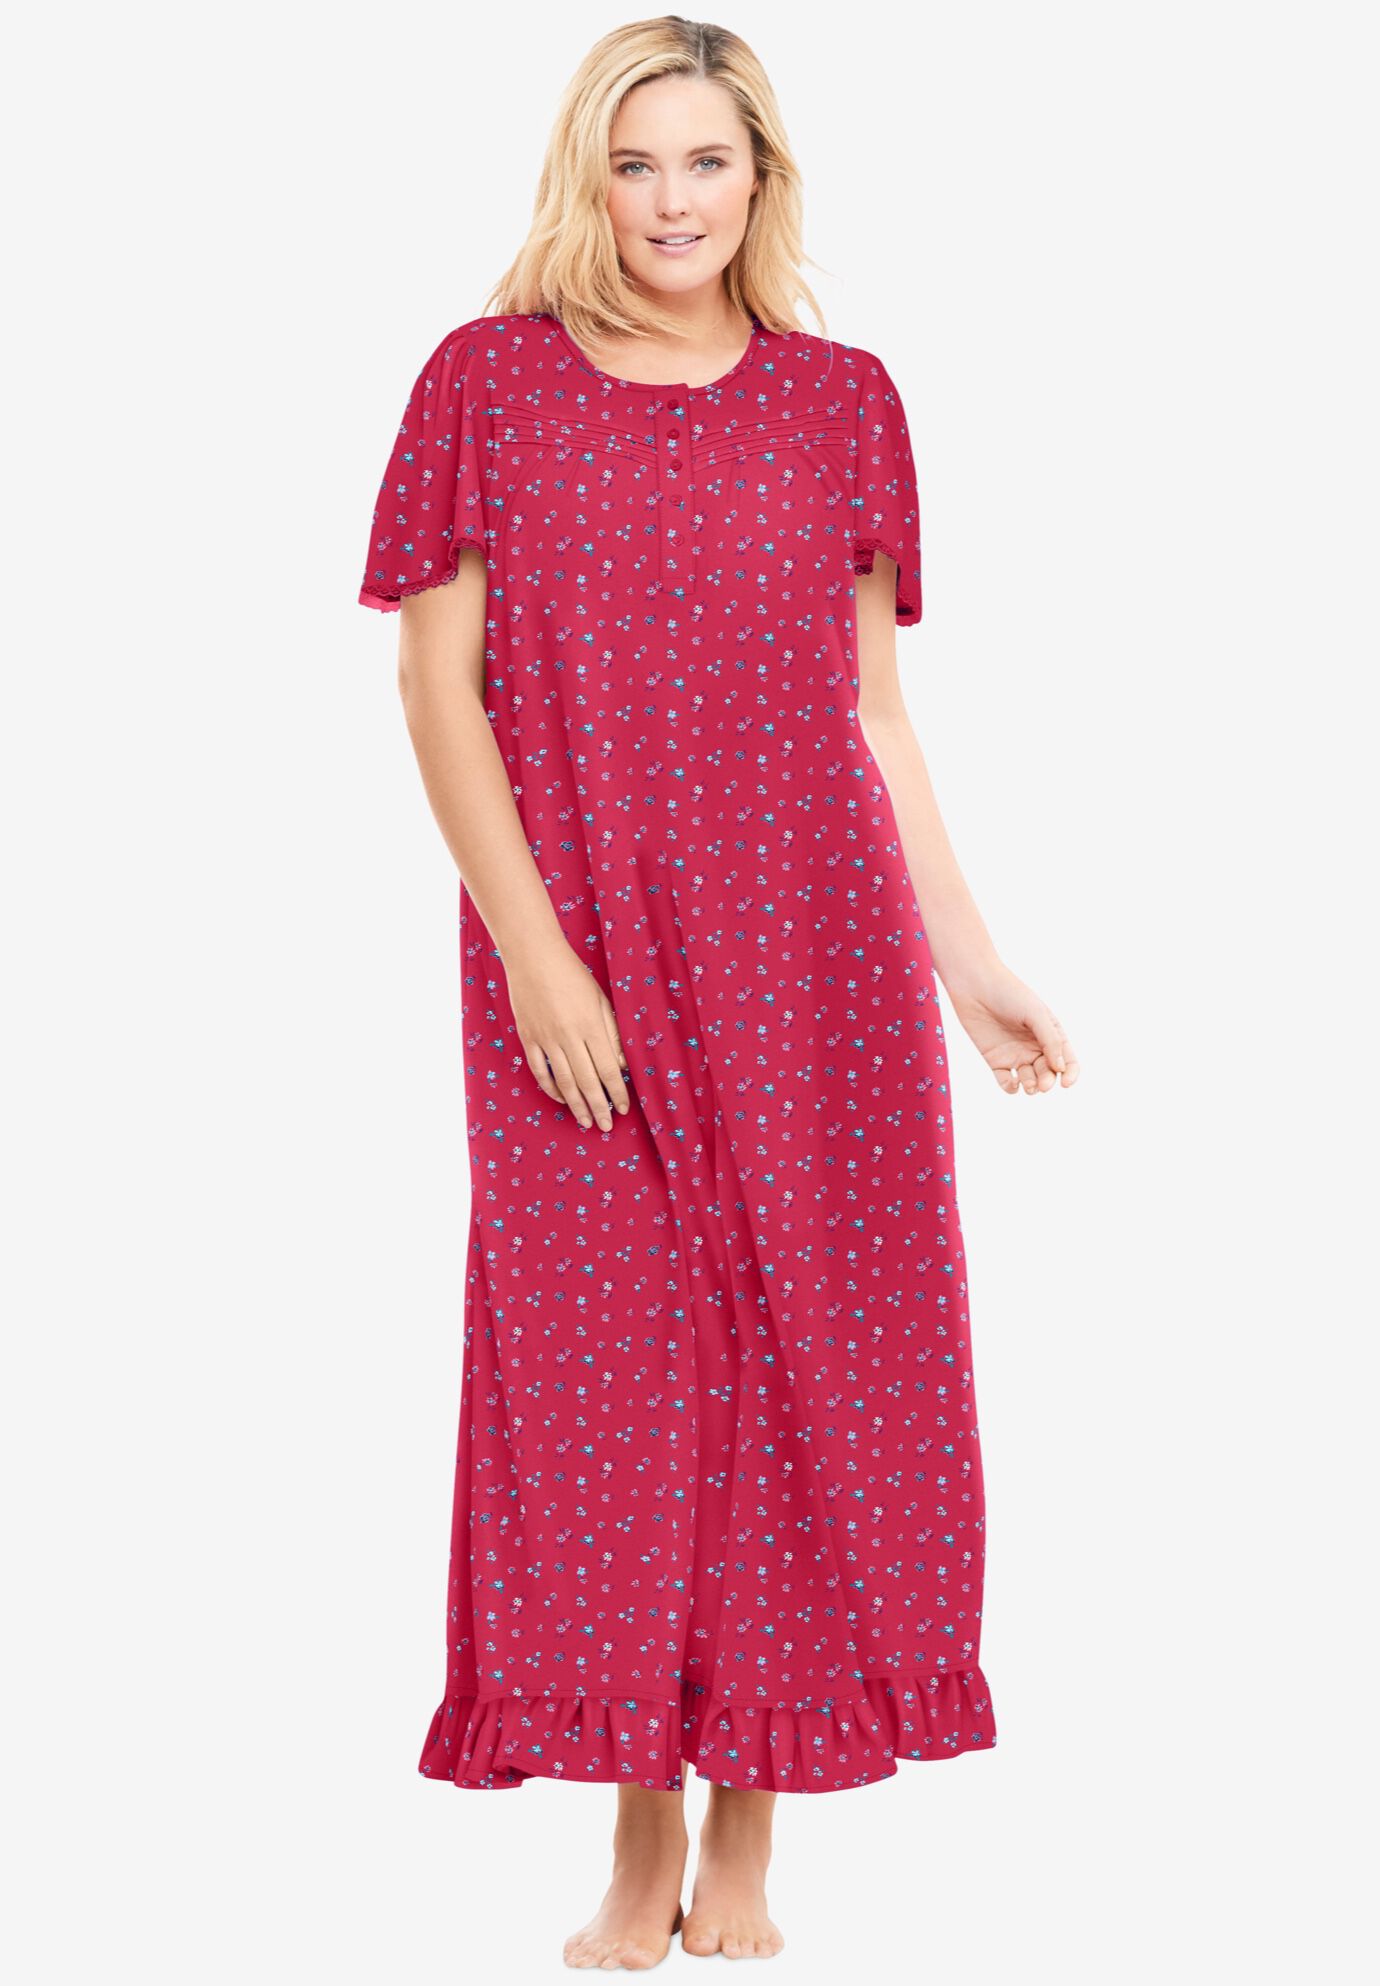 4x cotton nightgown